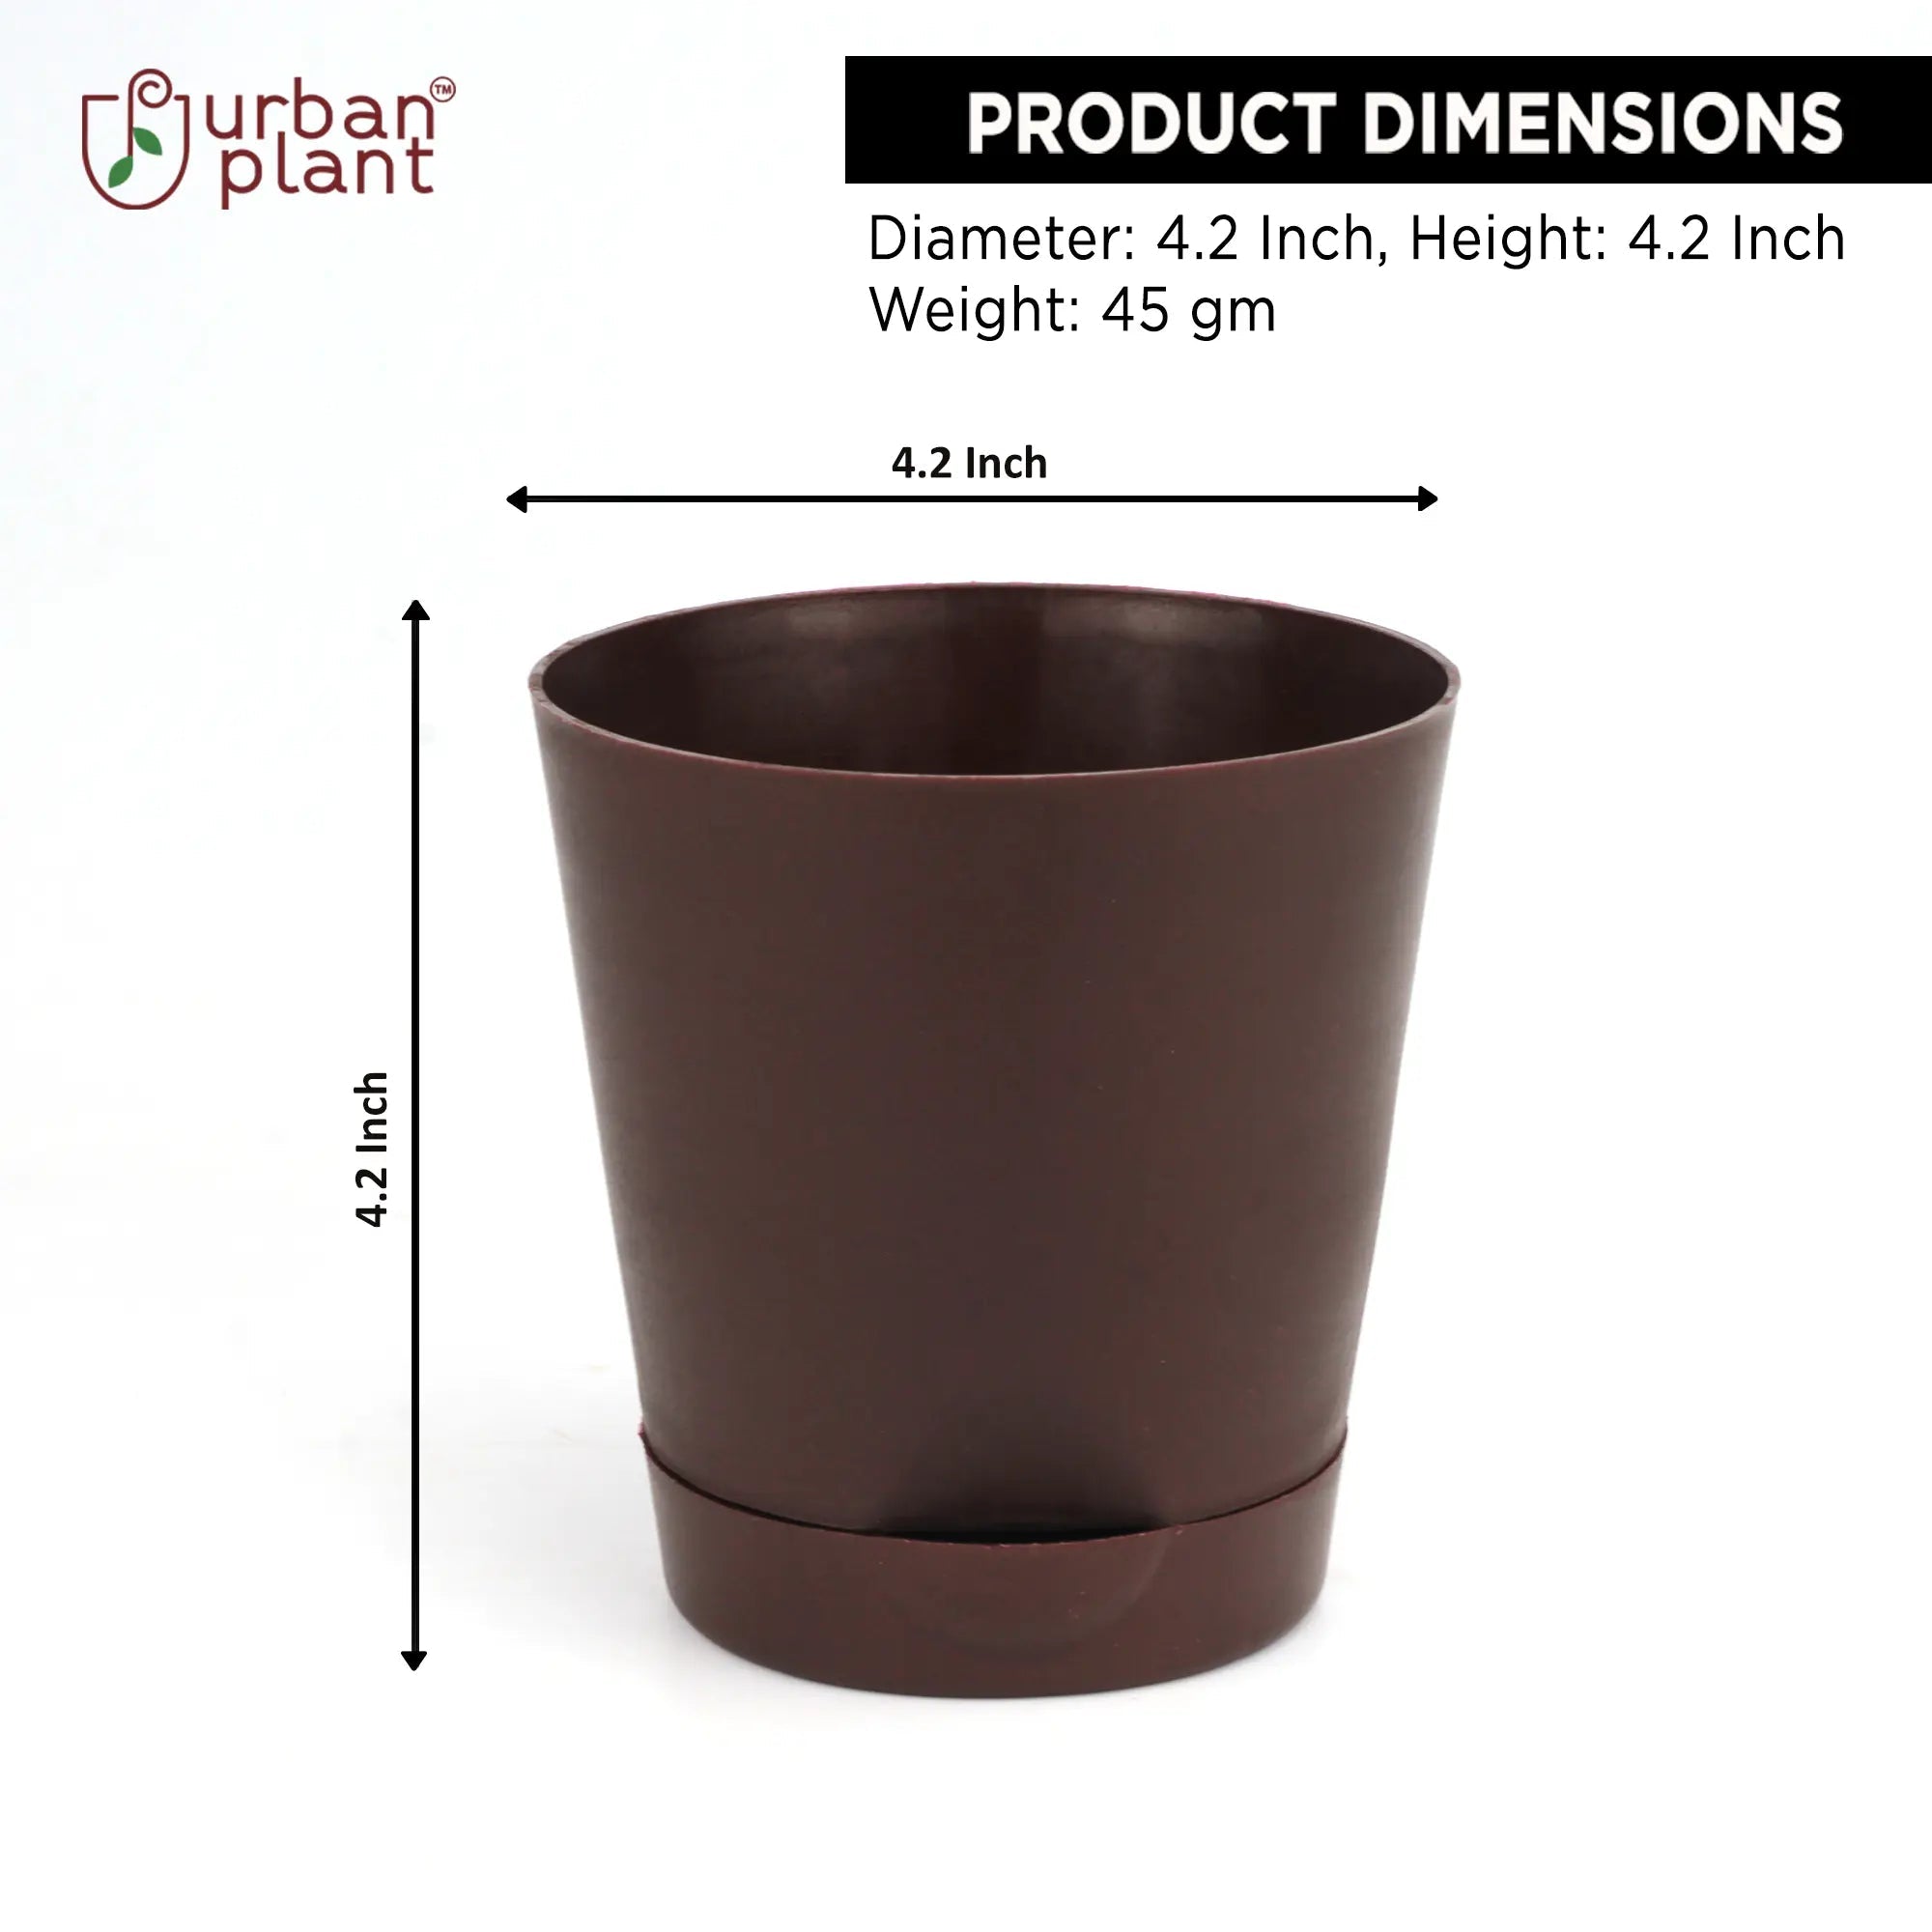 Vivid Self-Watering 4" Pot for Tabletop (Set Of 4) Urban Plant 